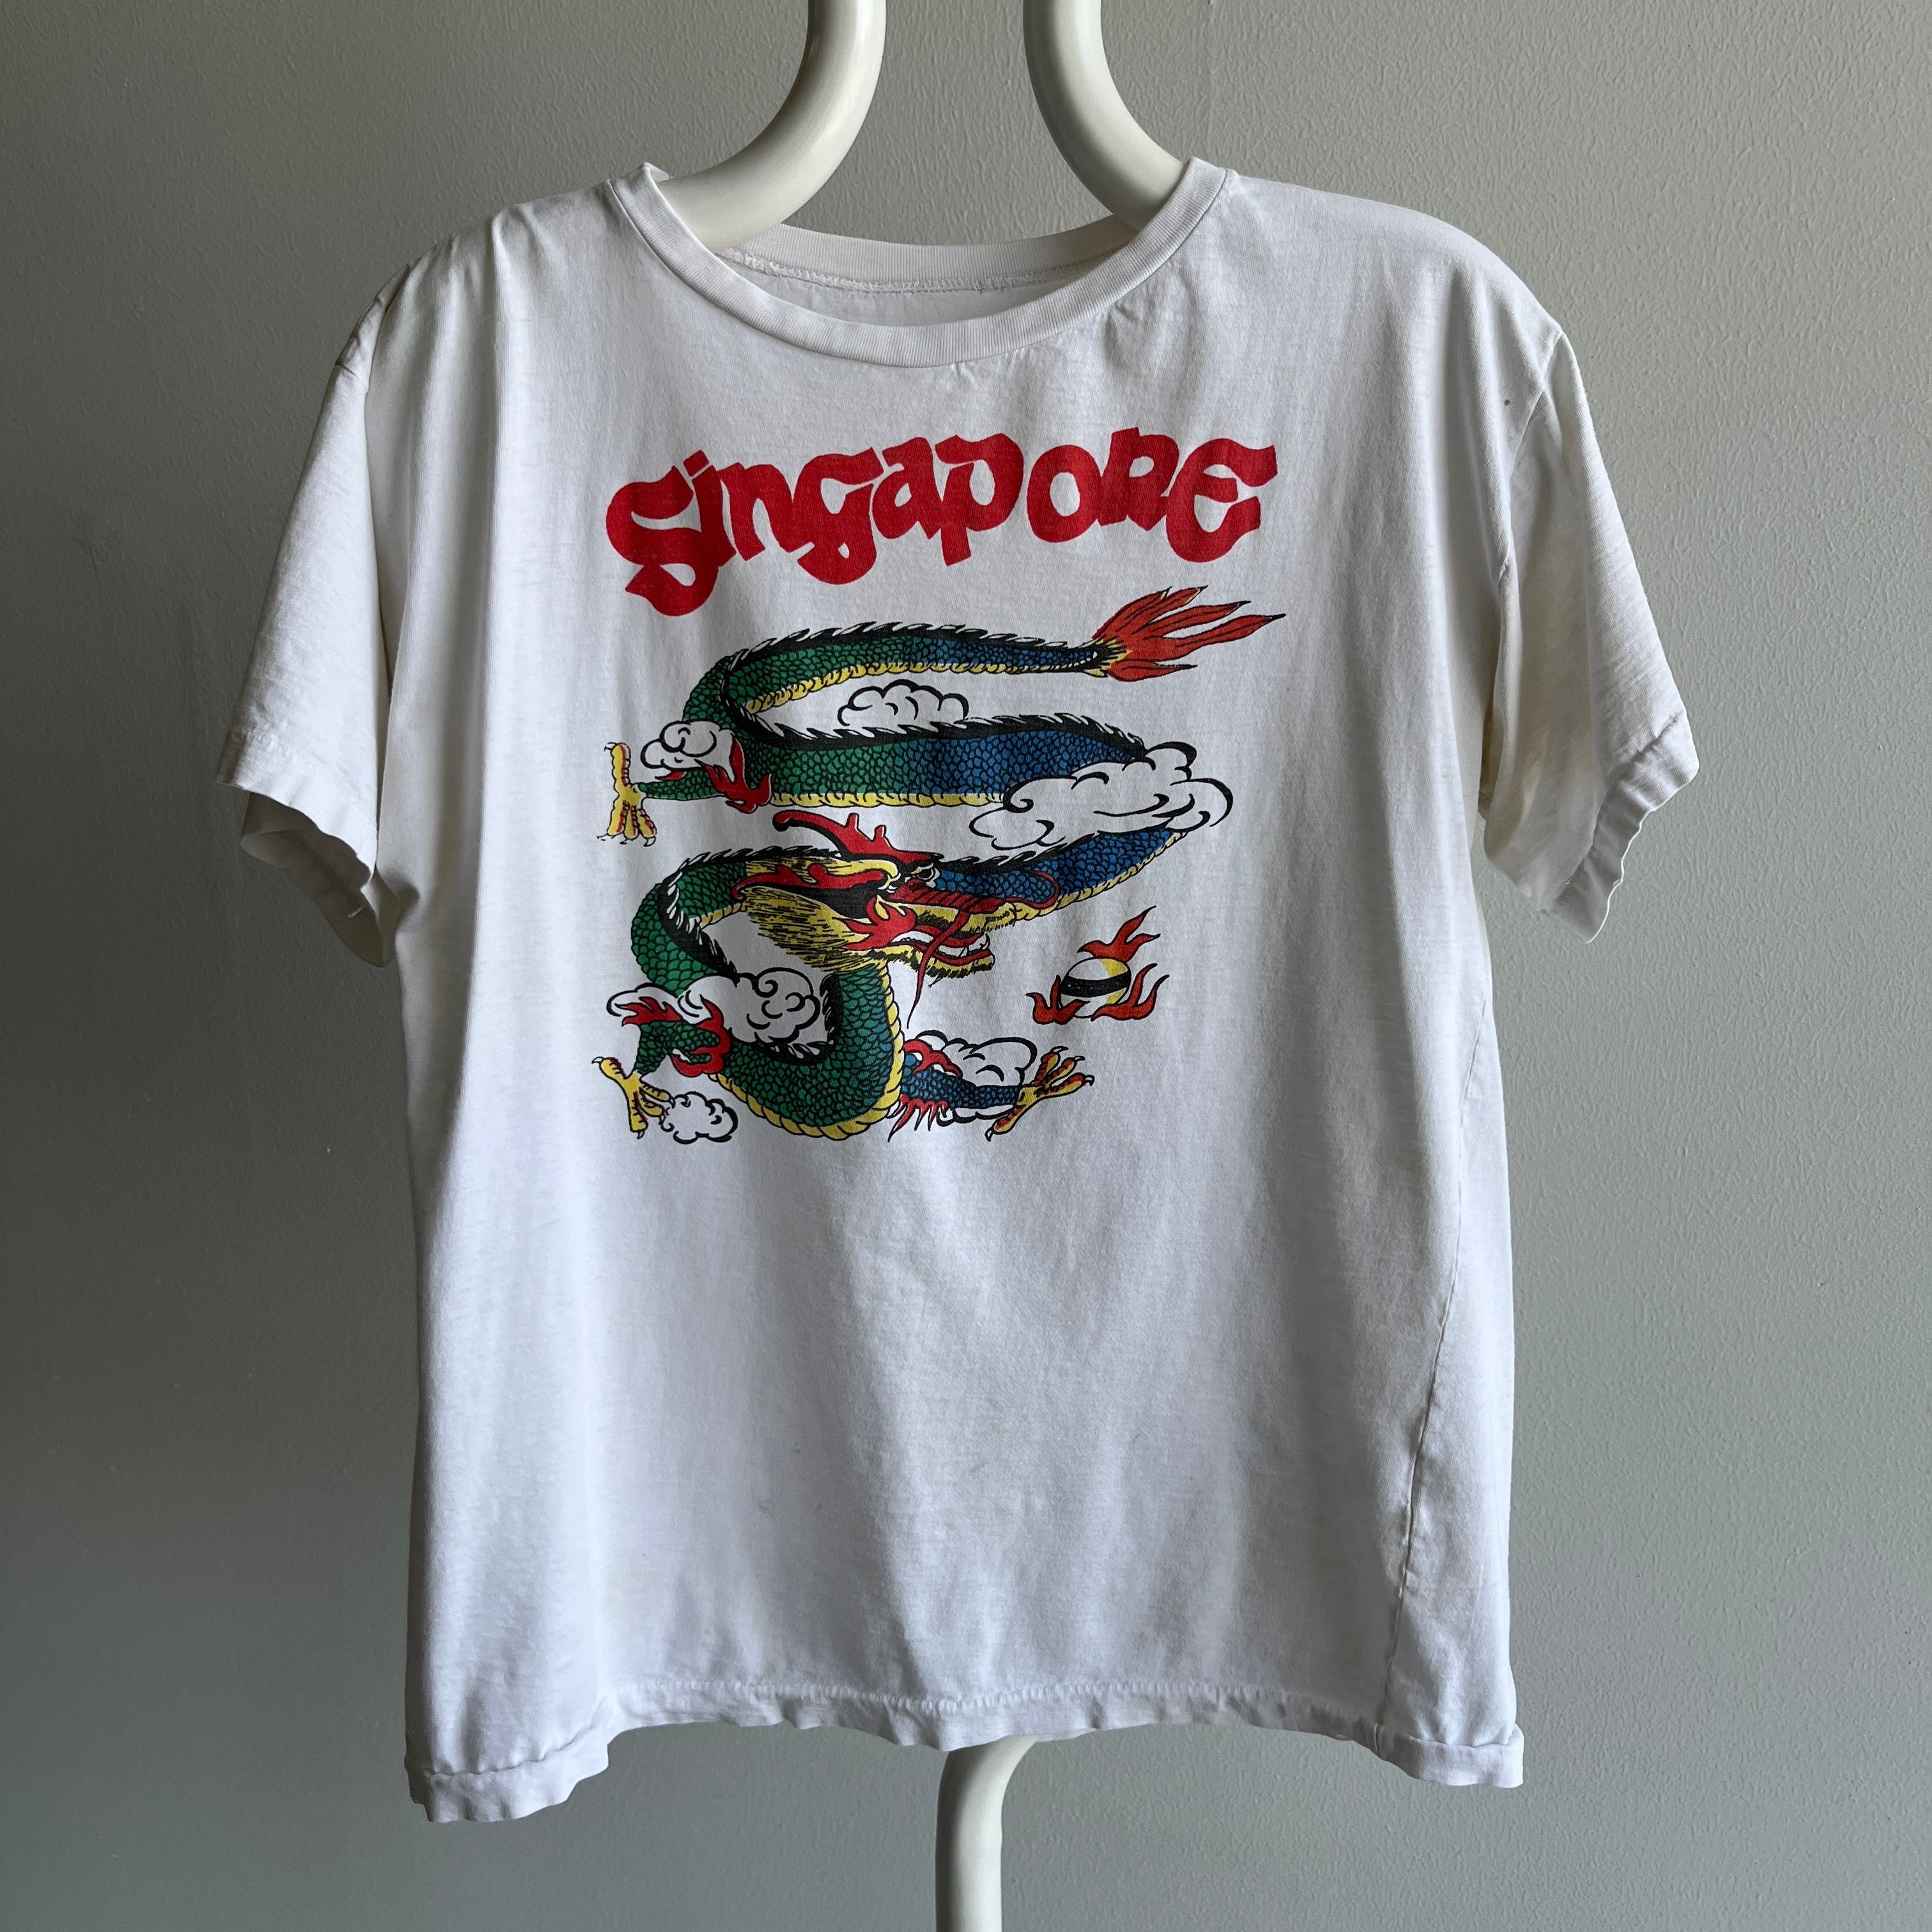 1990s Singapore Cotton Tourist T-Shirt